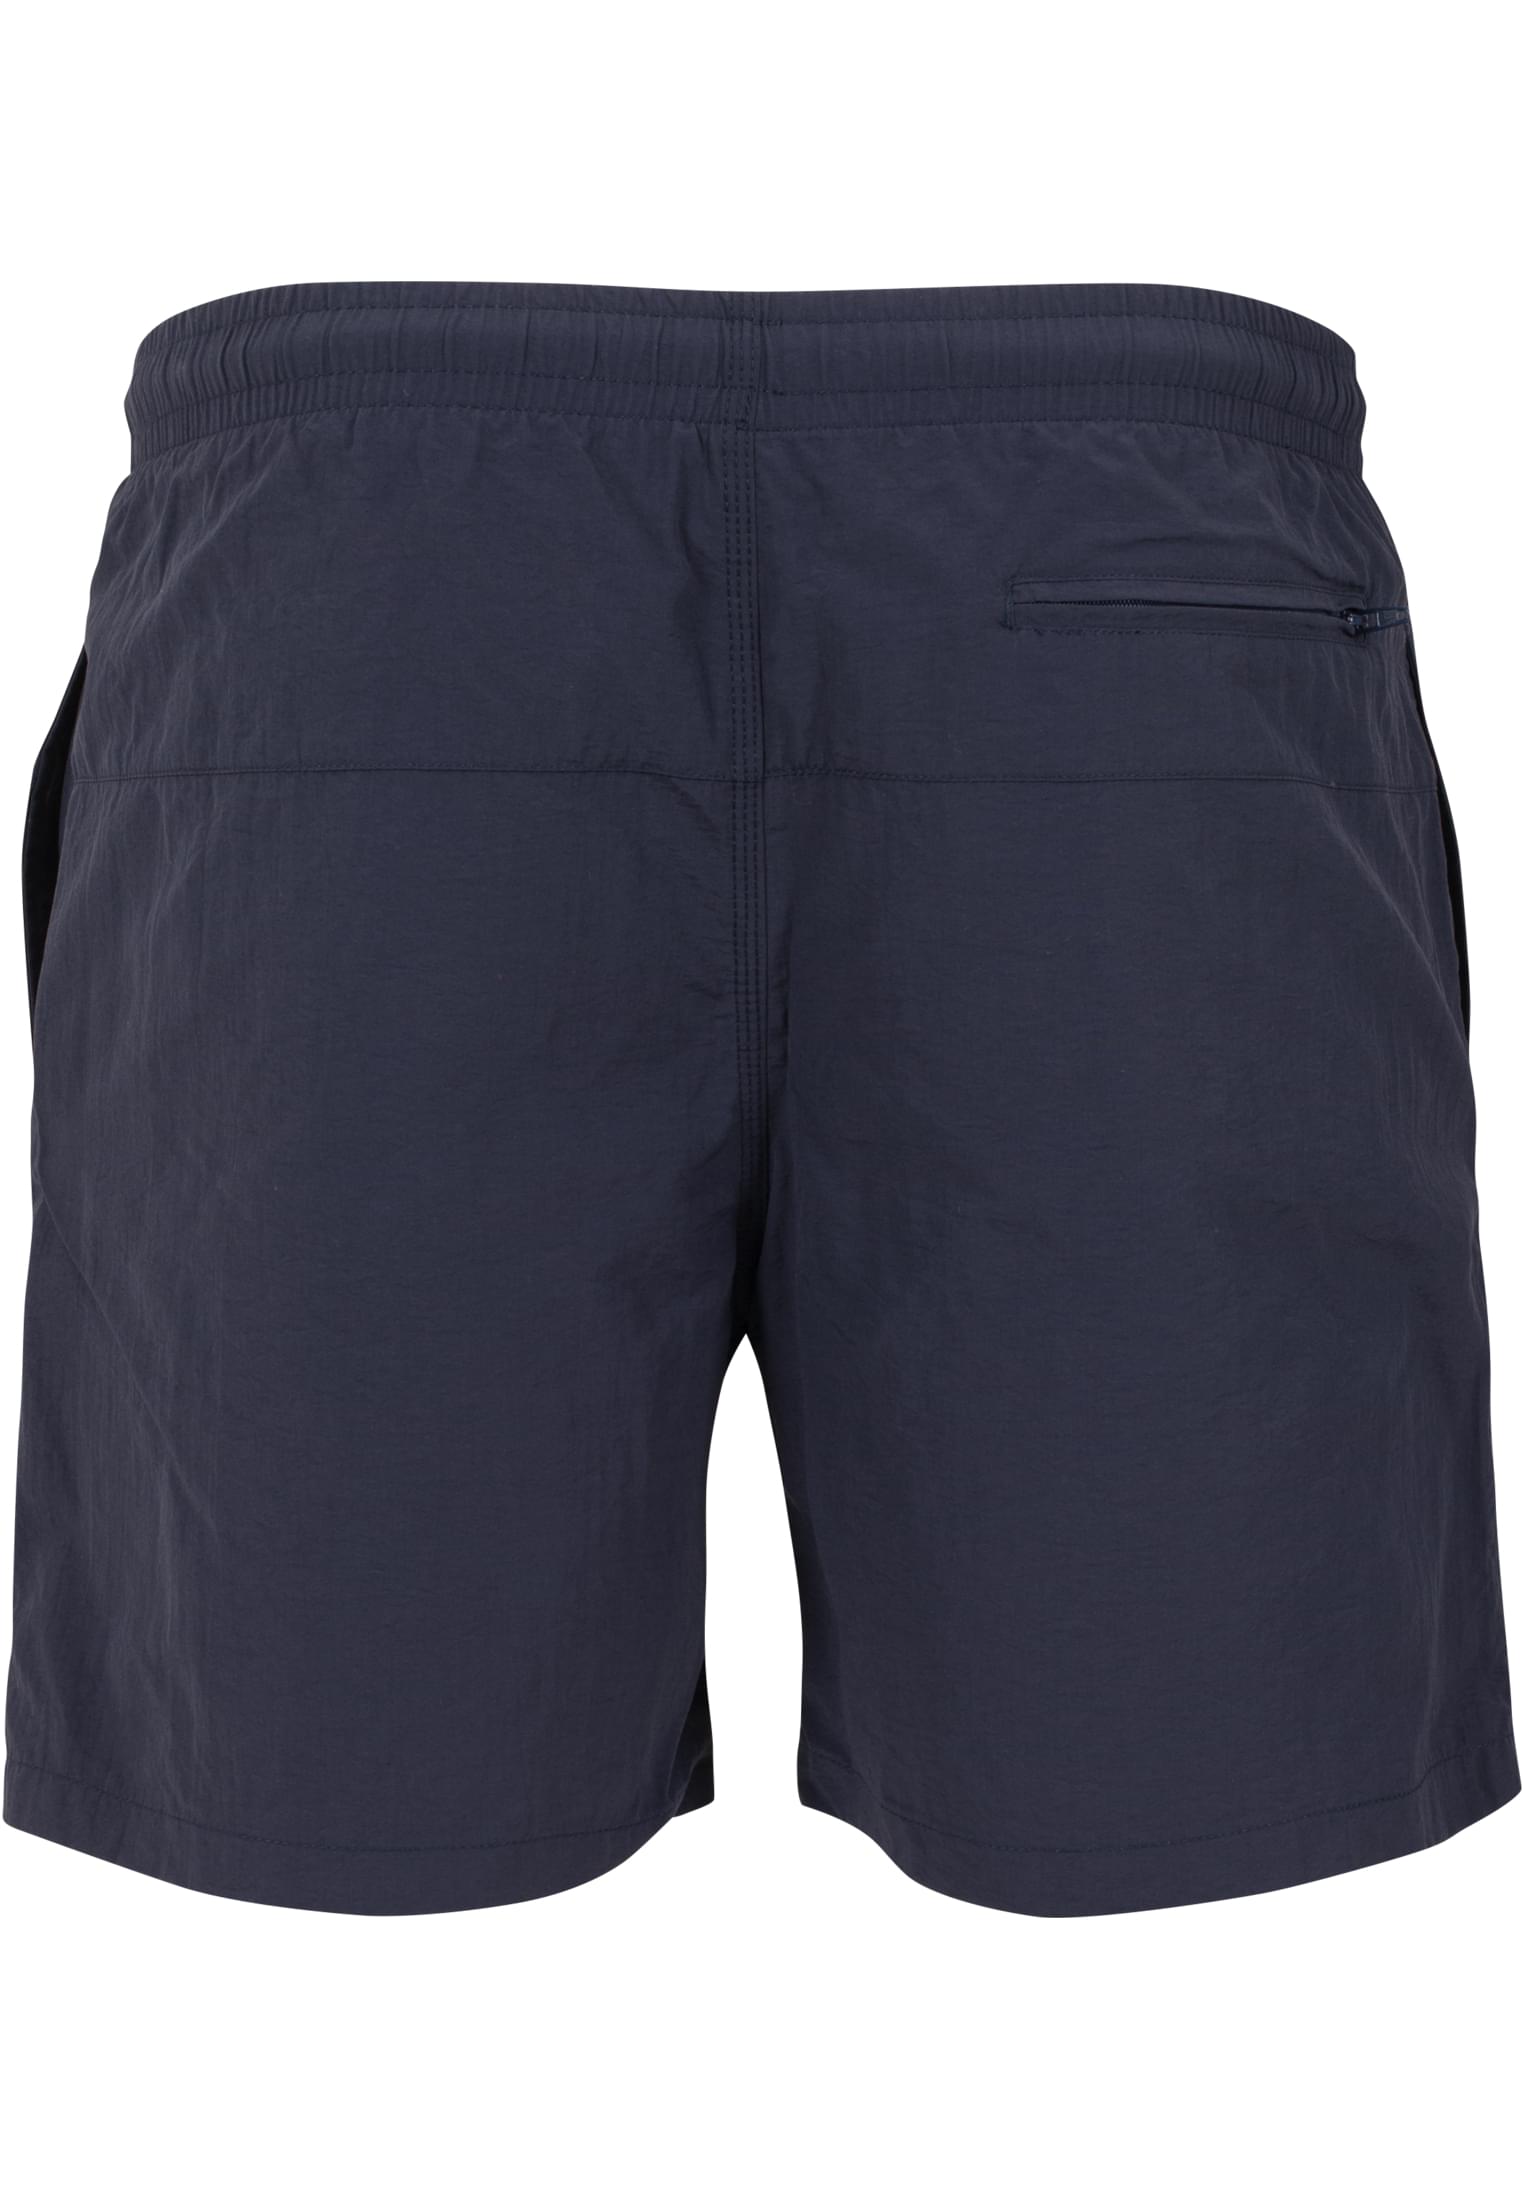 Plus Size Block Swim Shorts in Farbe navy/navy